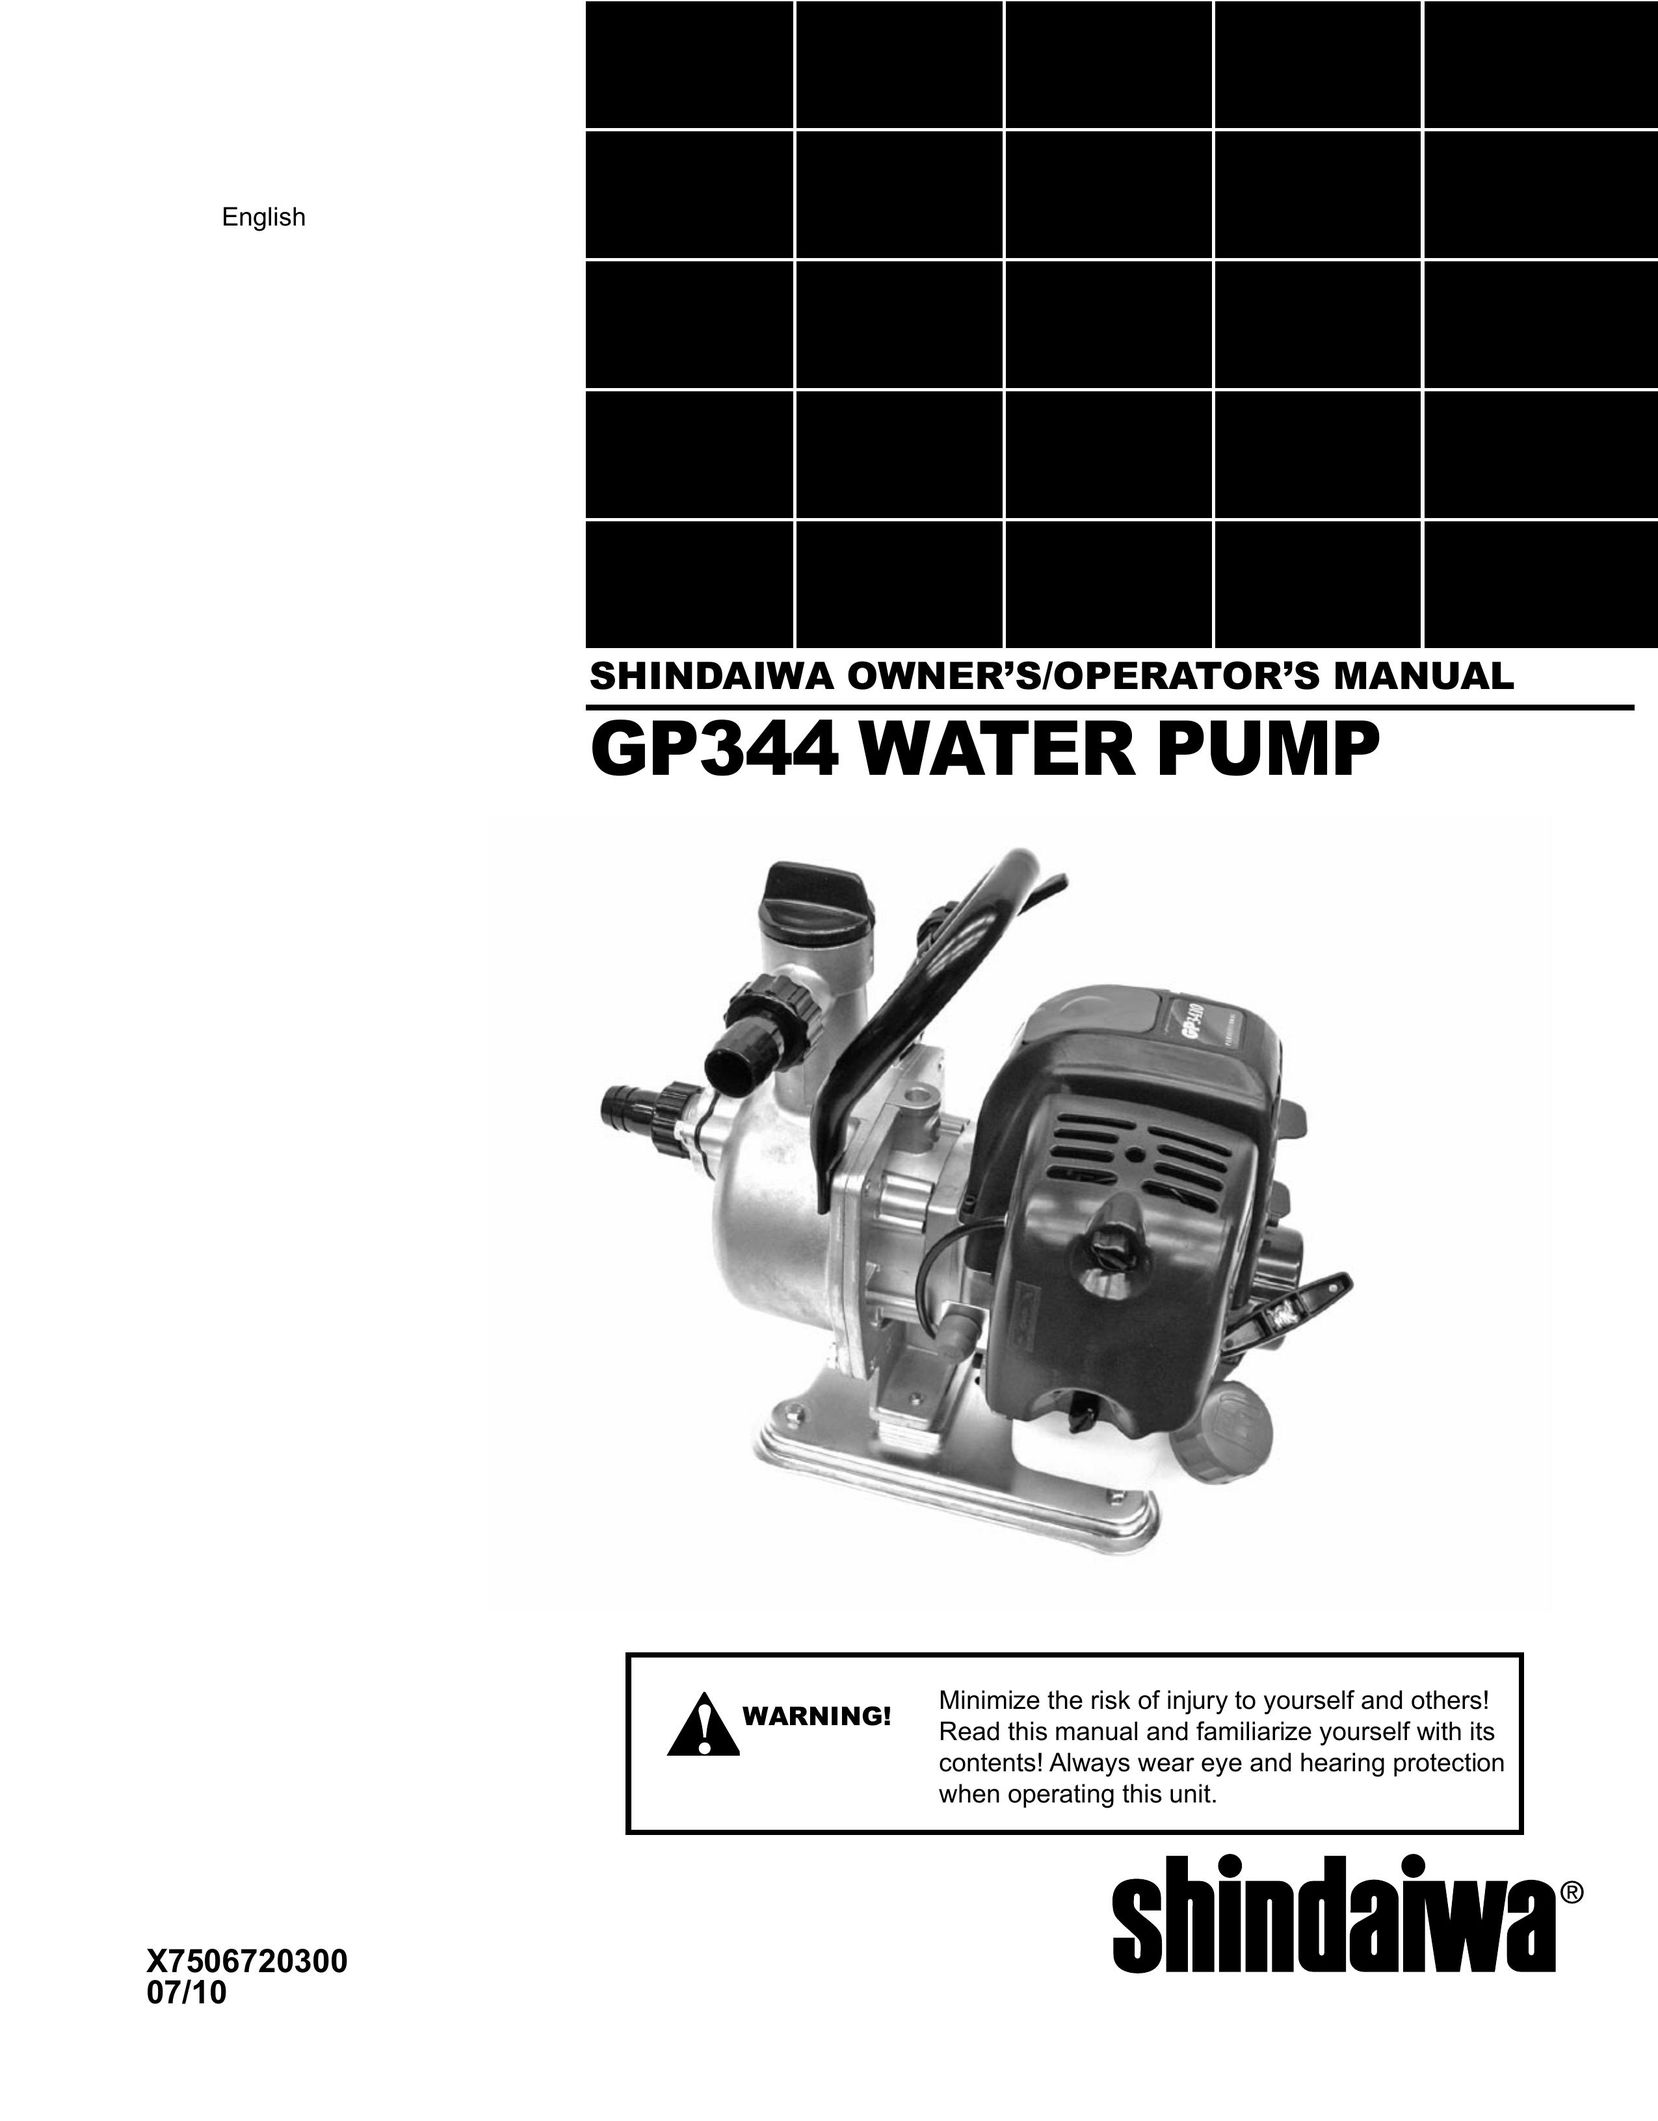 Shindaiwa X7506720300 Water Pump User Manual